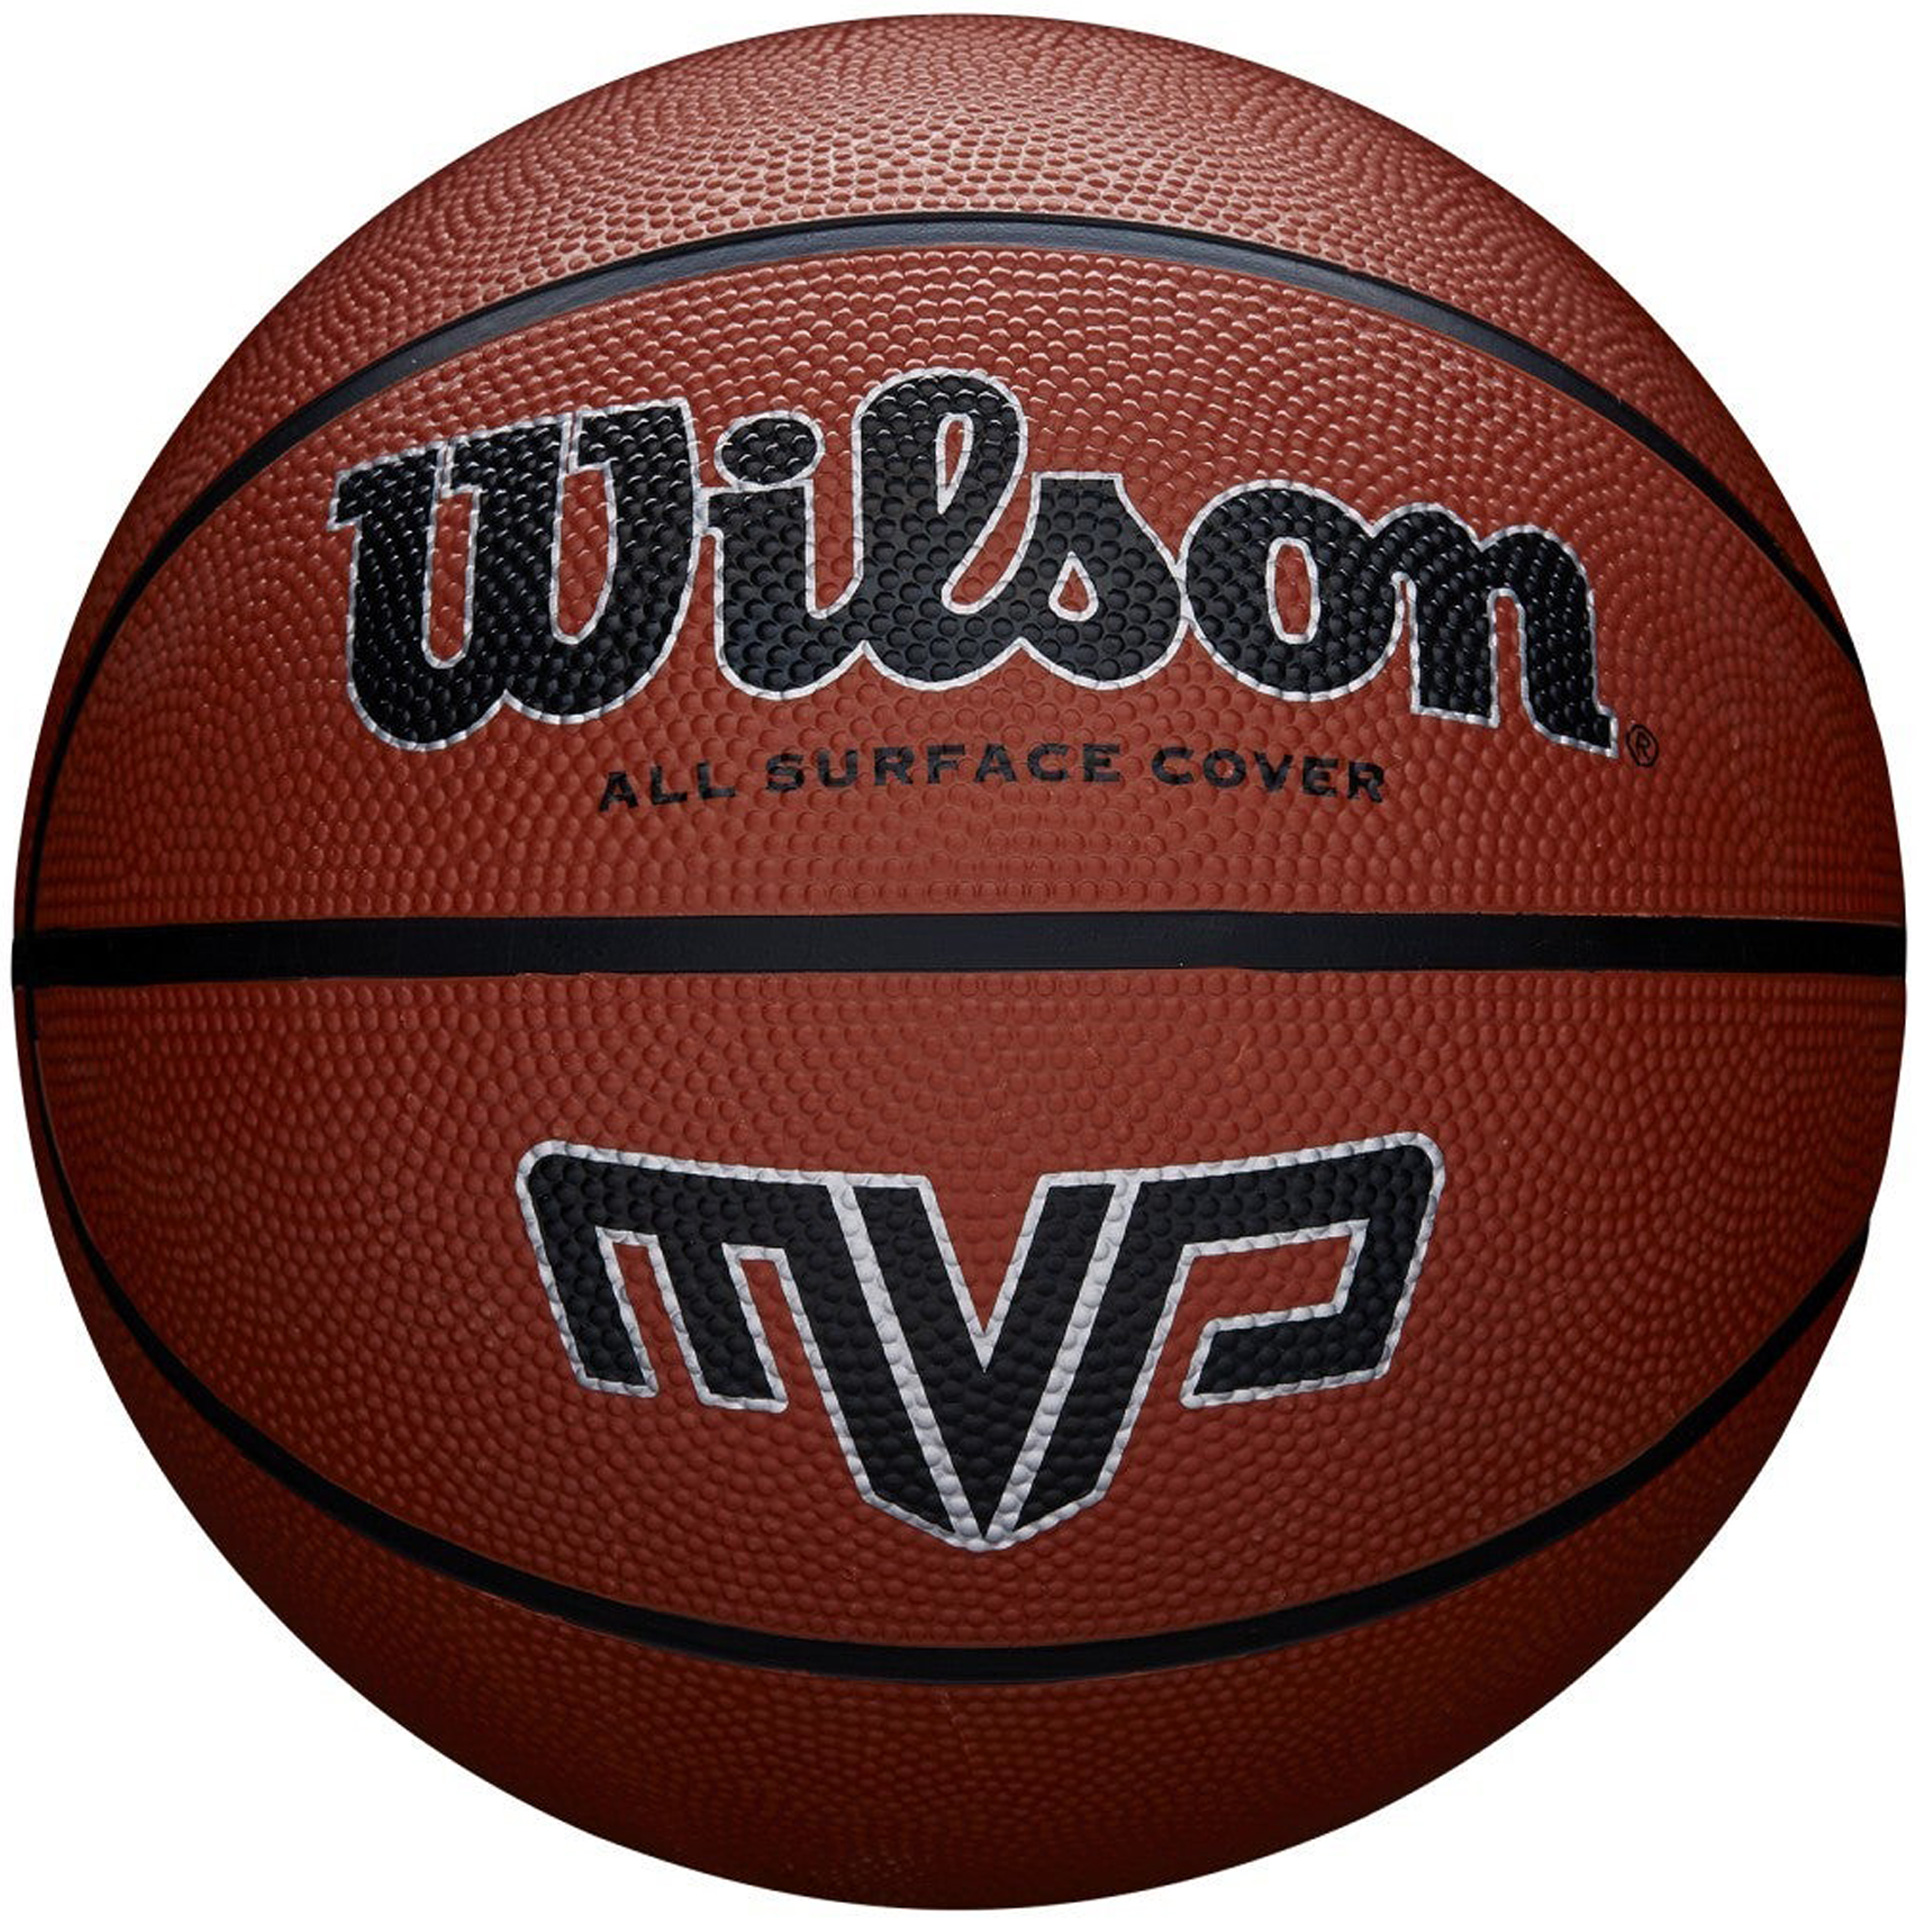 Balon baloncesto wilson mvp bskt brown